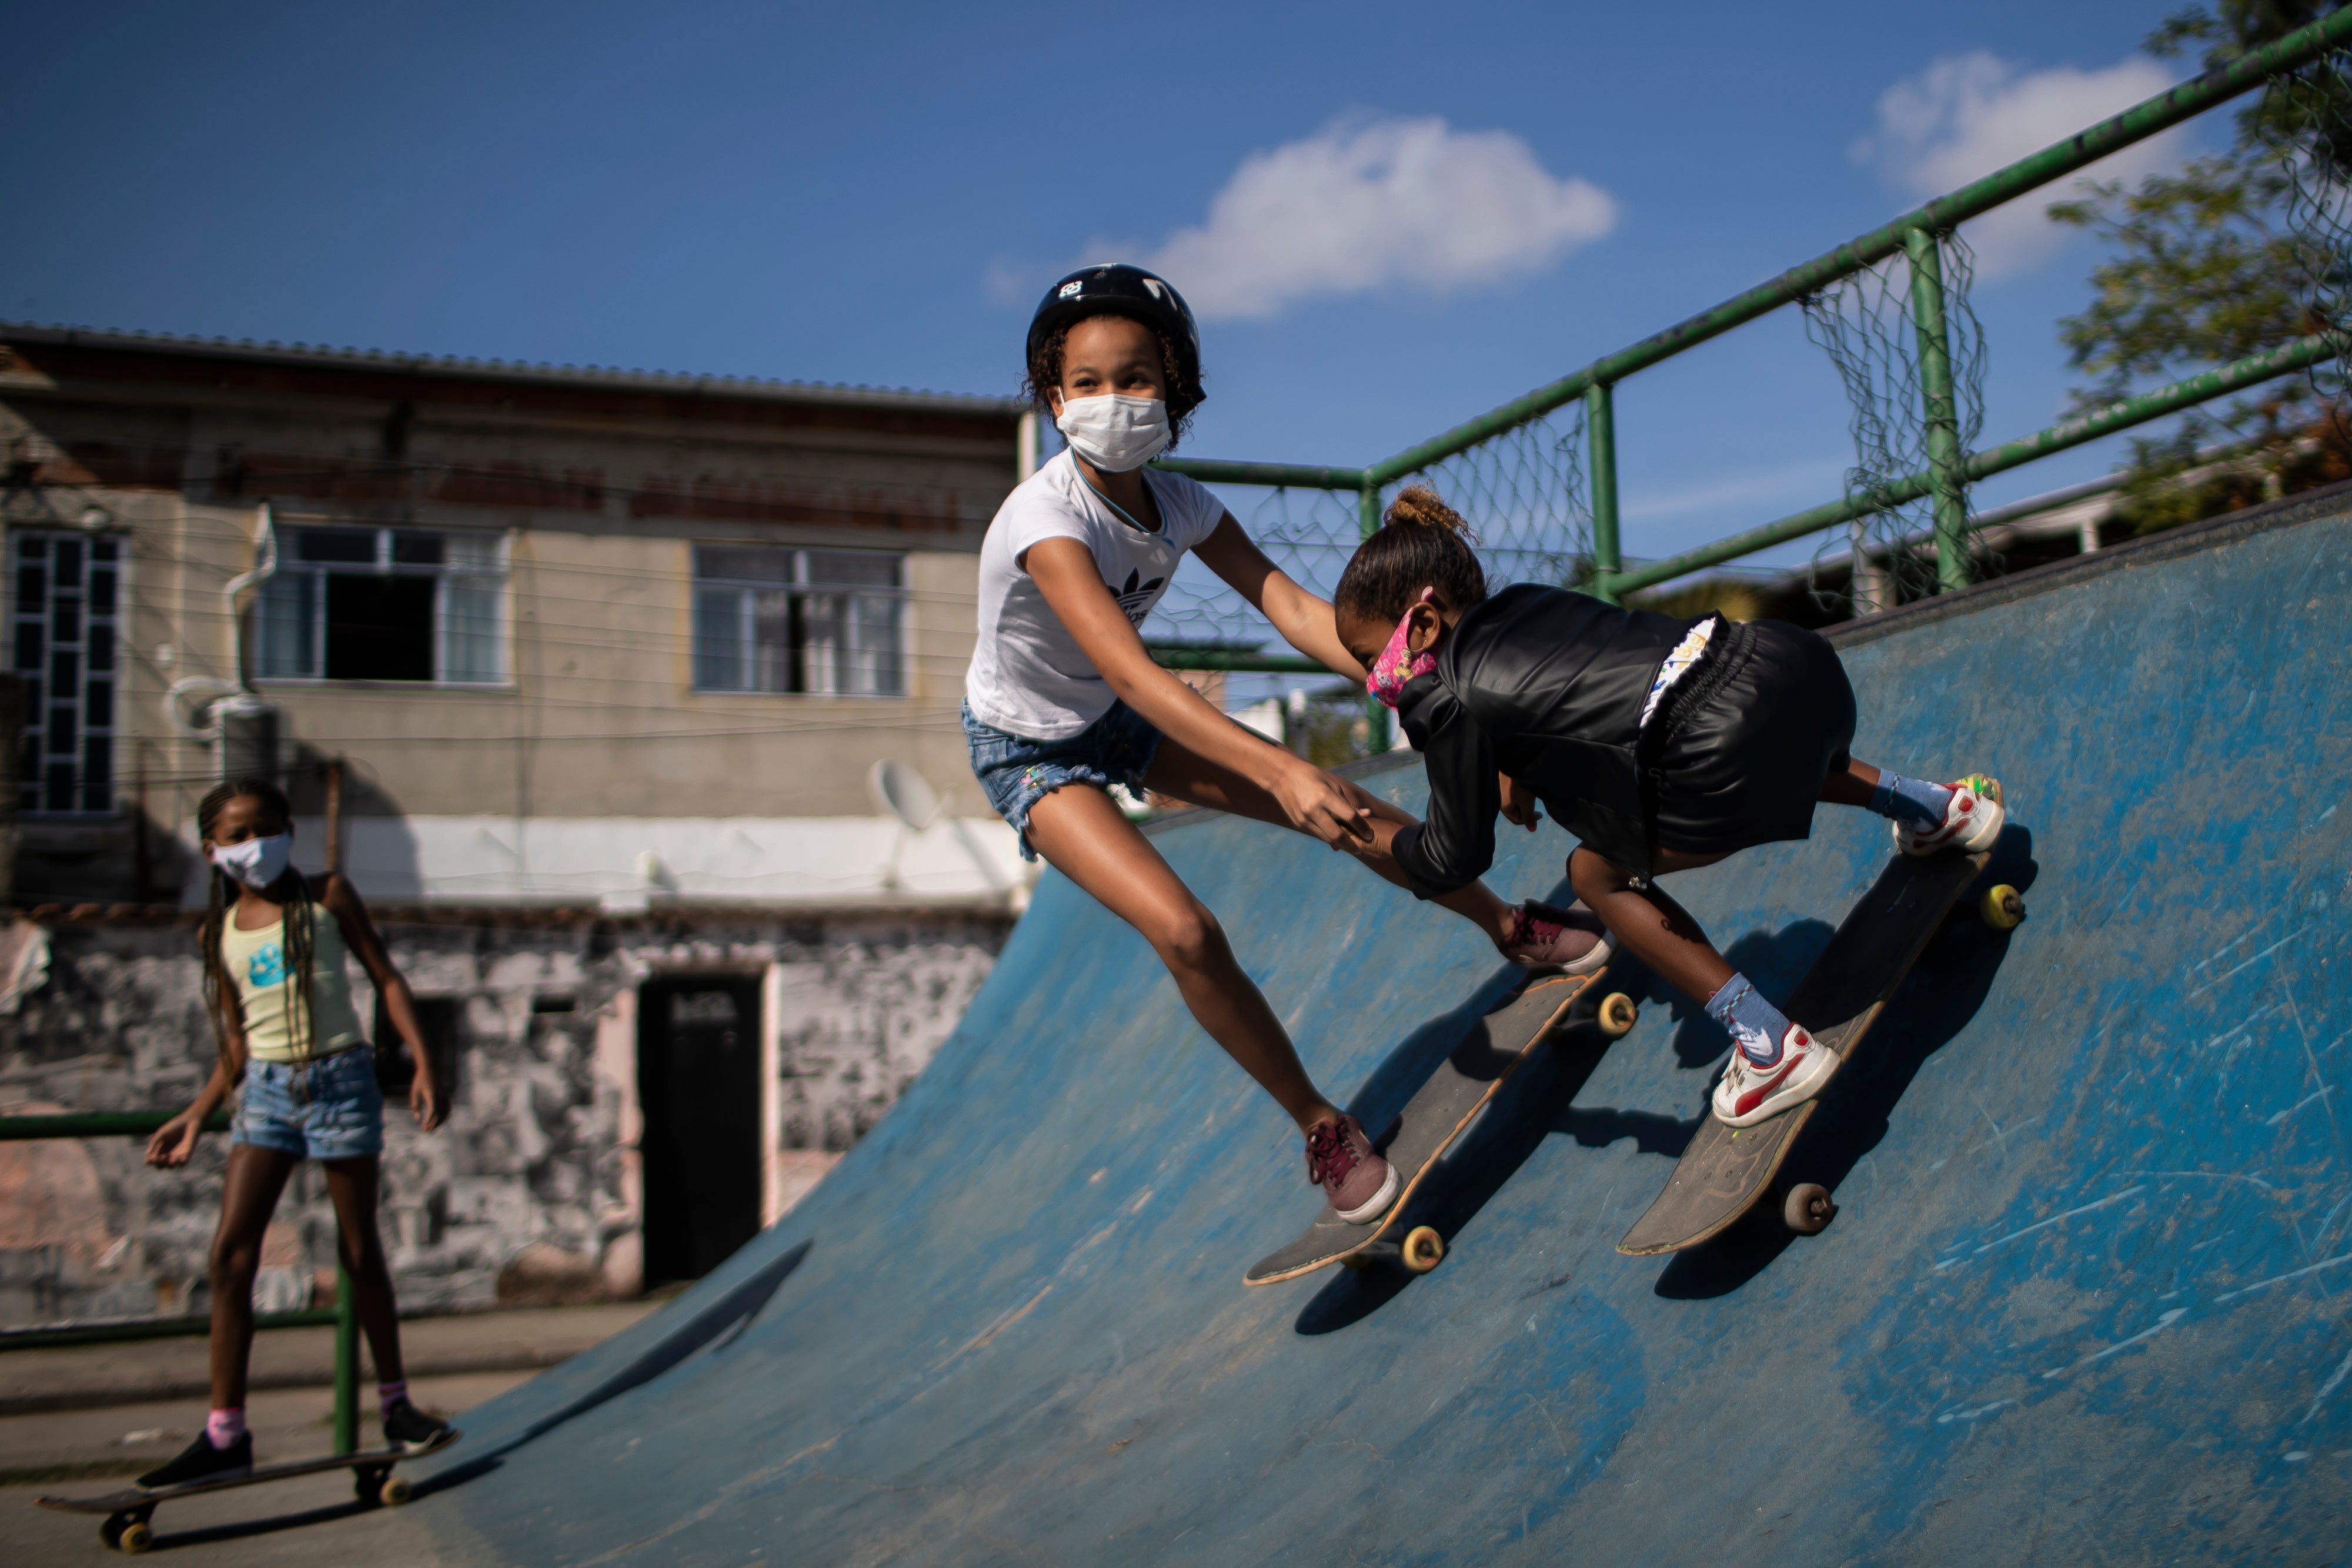 Brazil Skateboarding